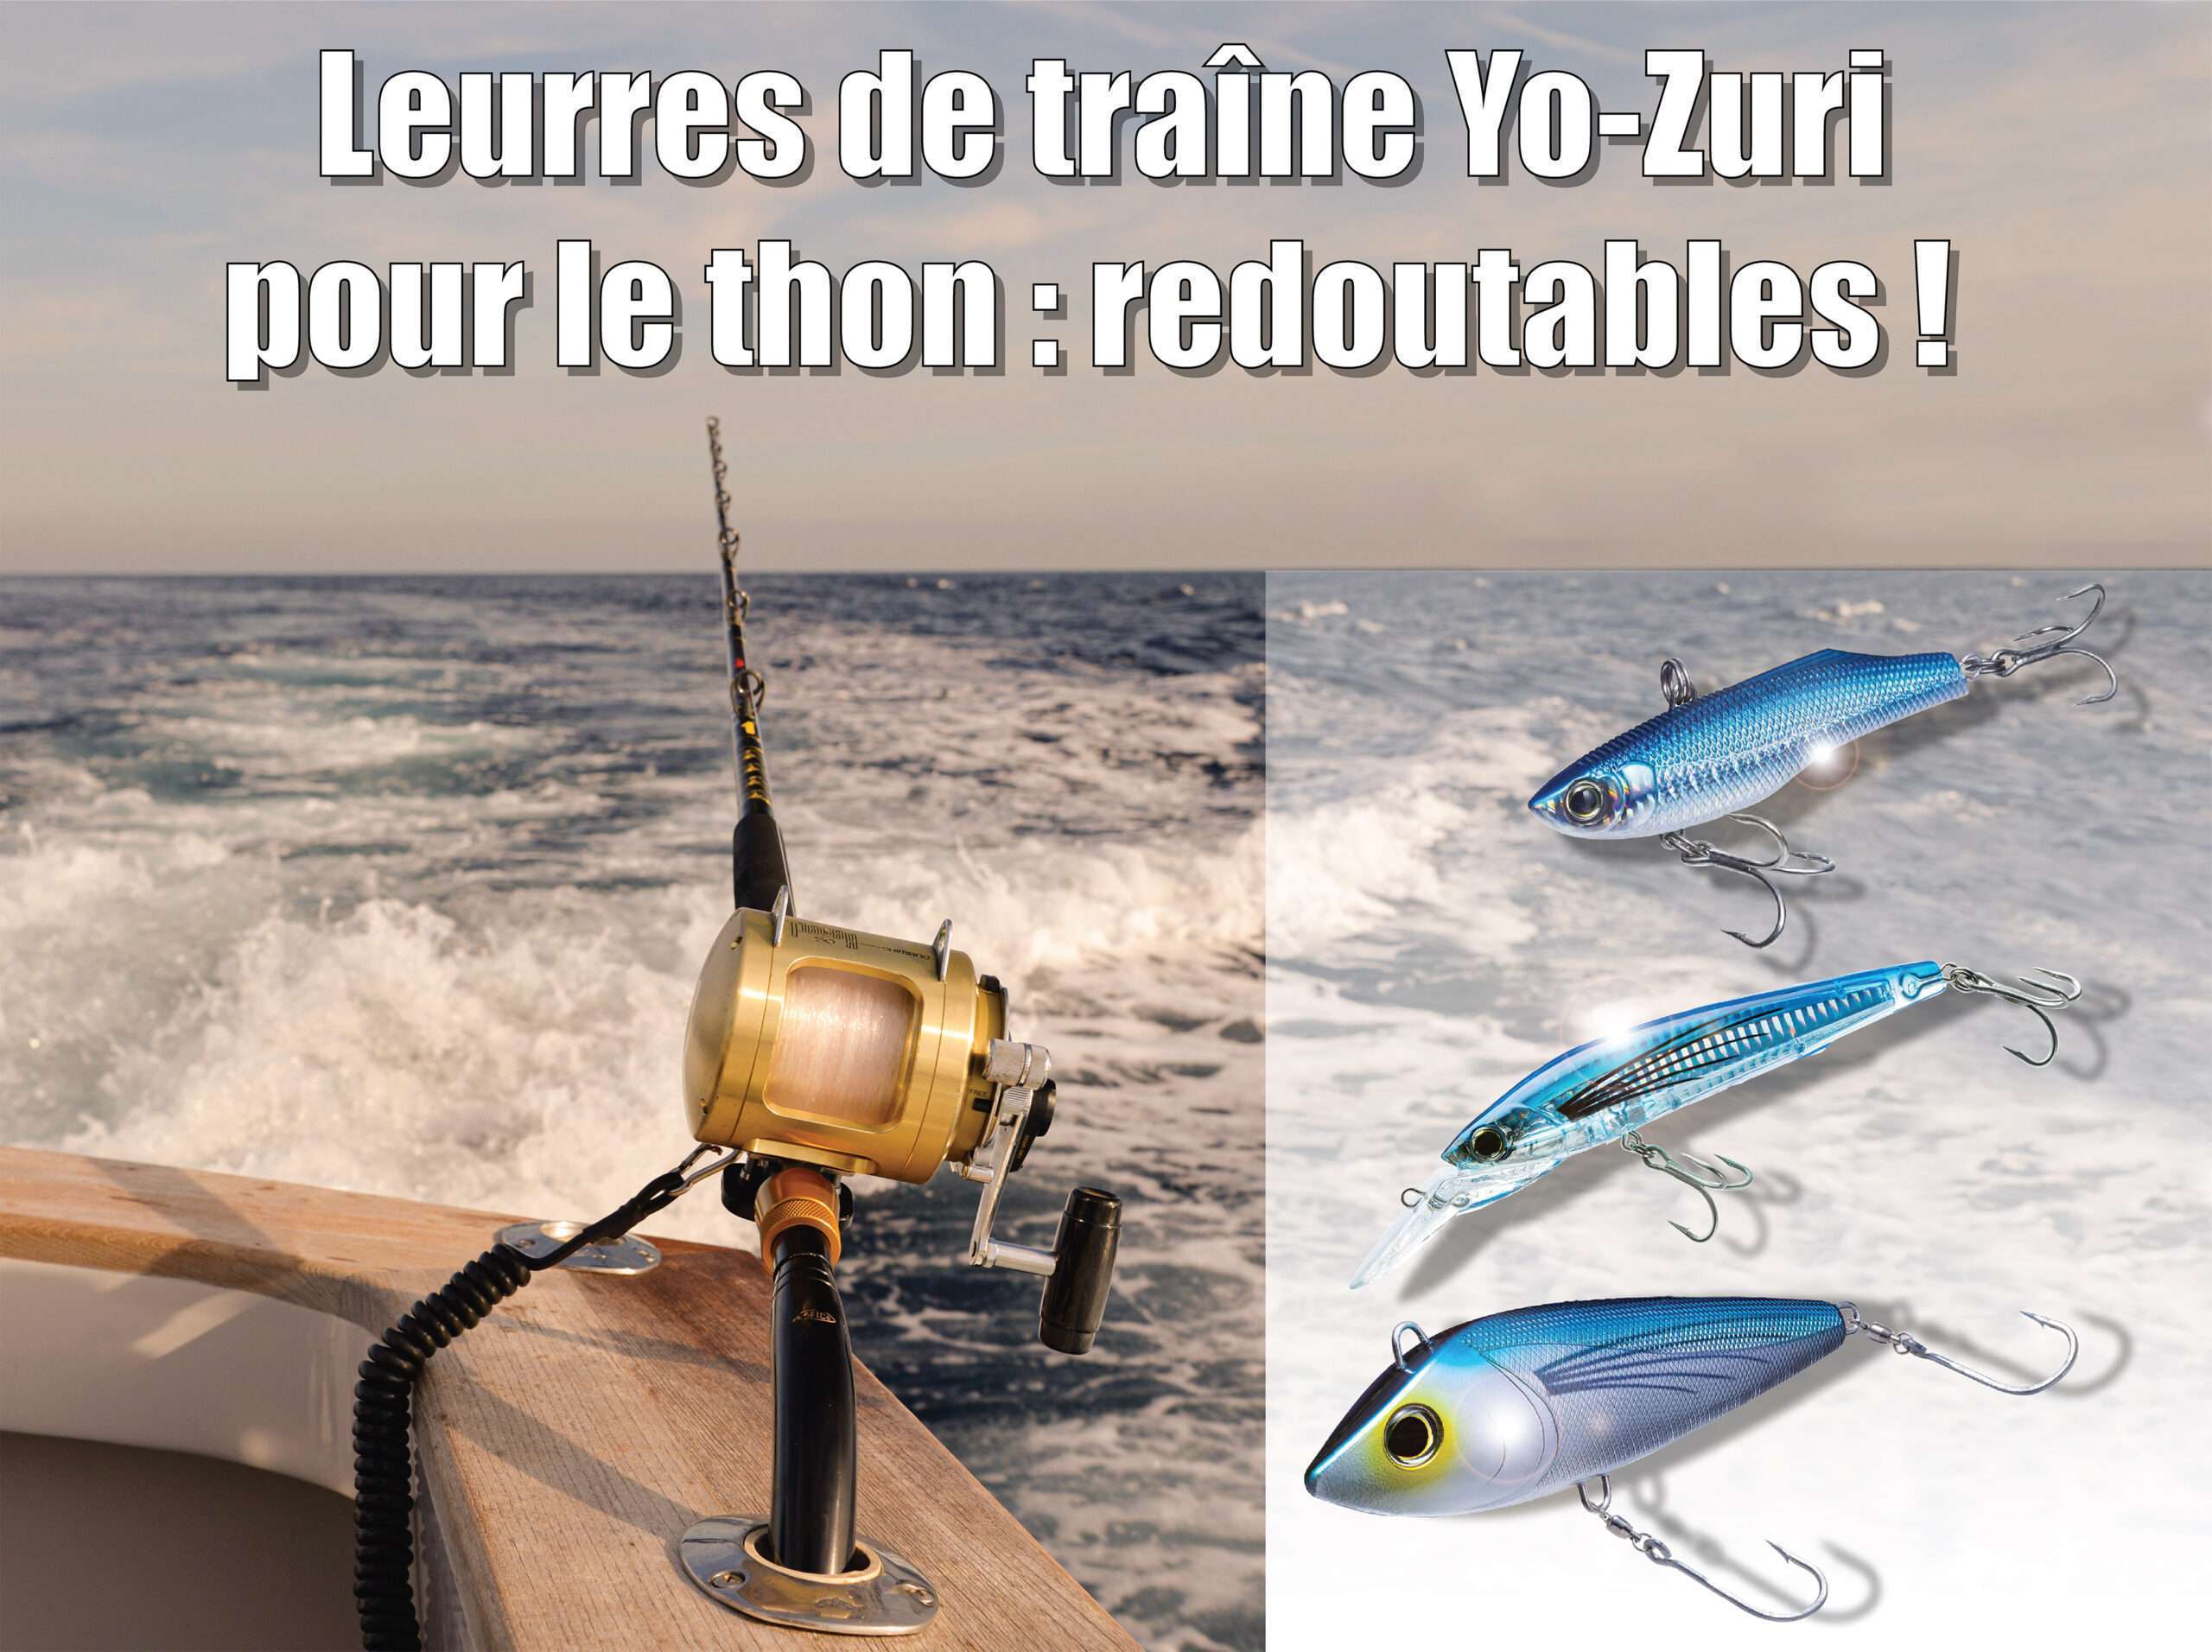 Leurres de traîne Yo-Zuri pour le thon : redoutables ! - Blog Flashmer